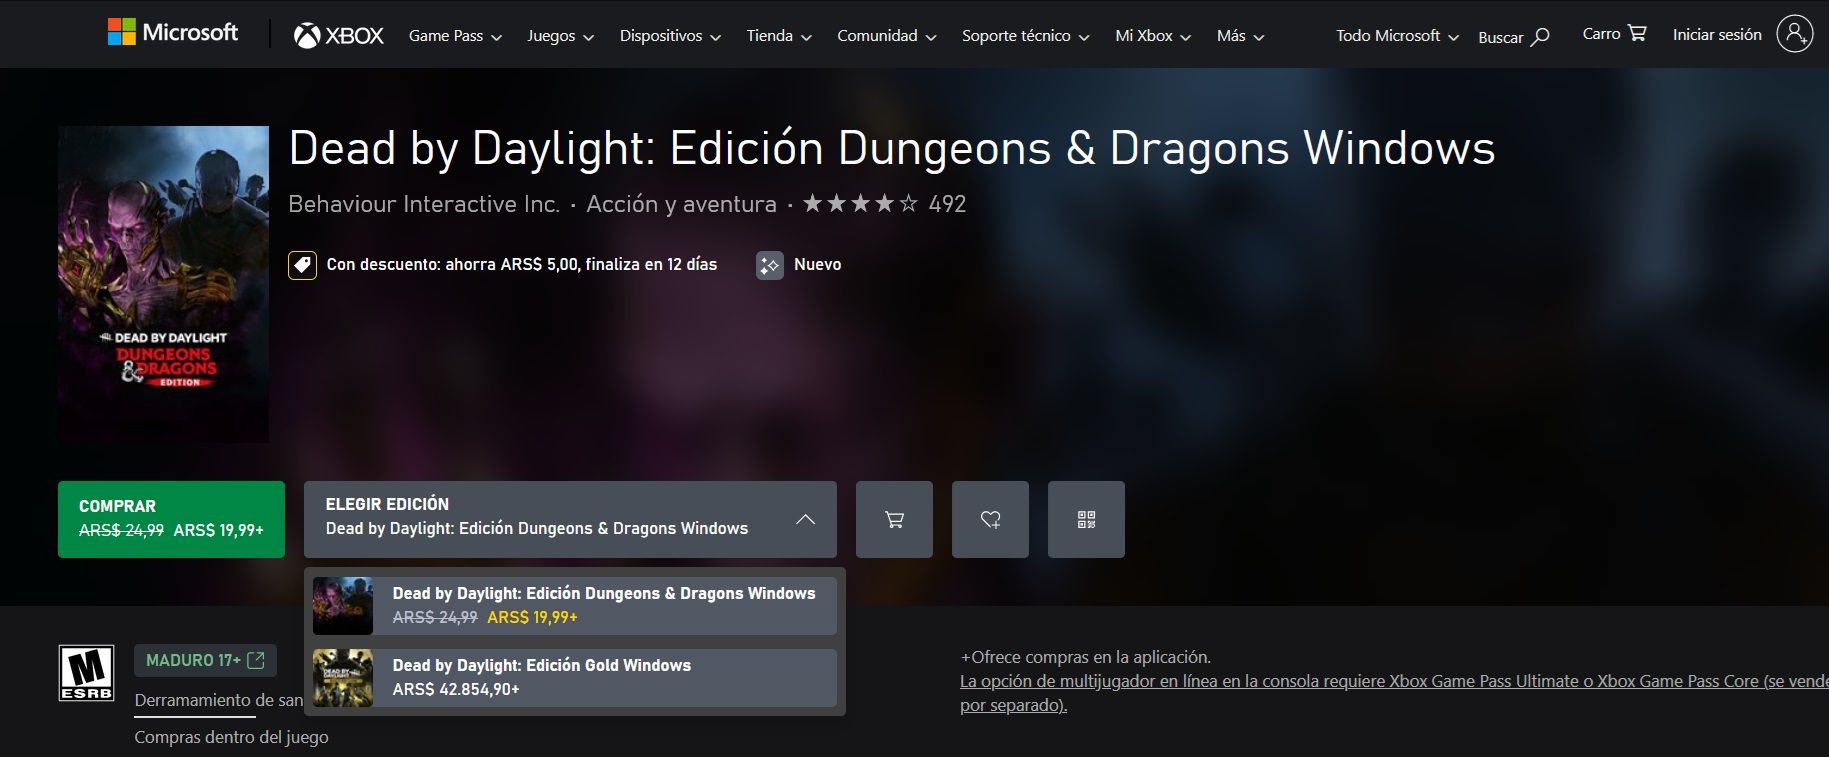 Dead by Daylight Edición Dungeons & Dragons Windows argentina xbox pc 20 pesos